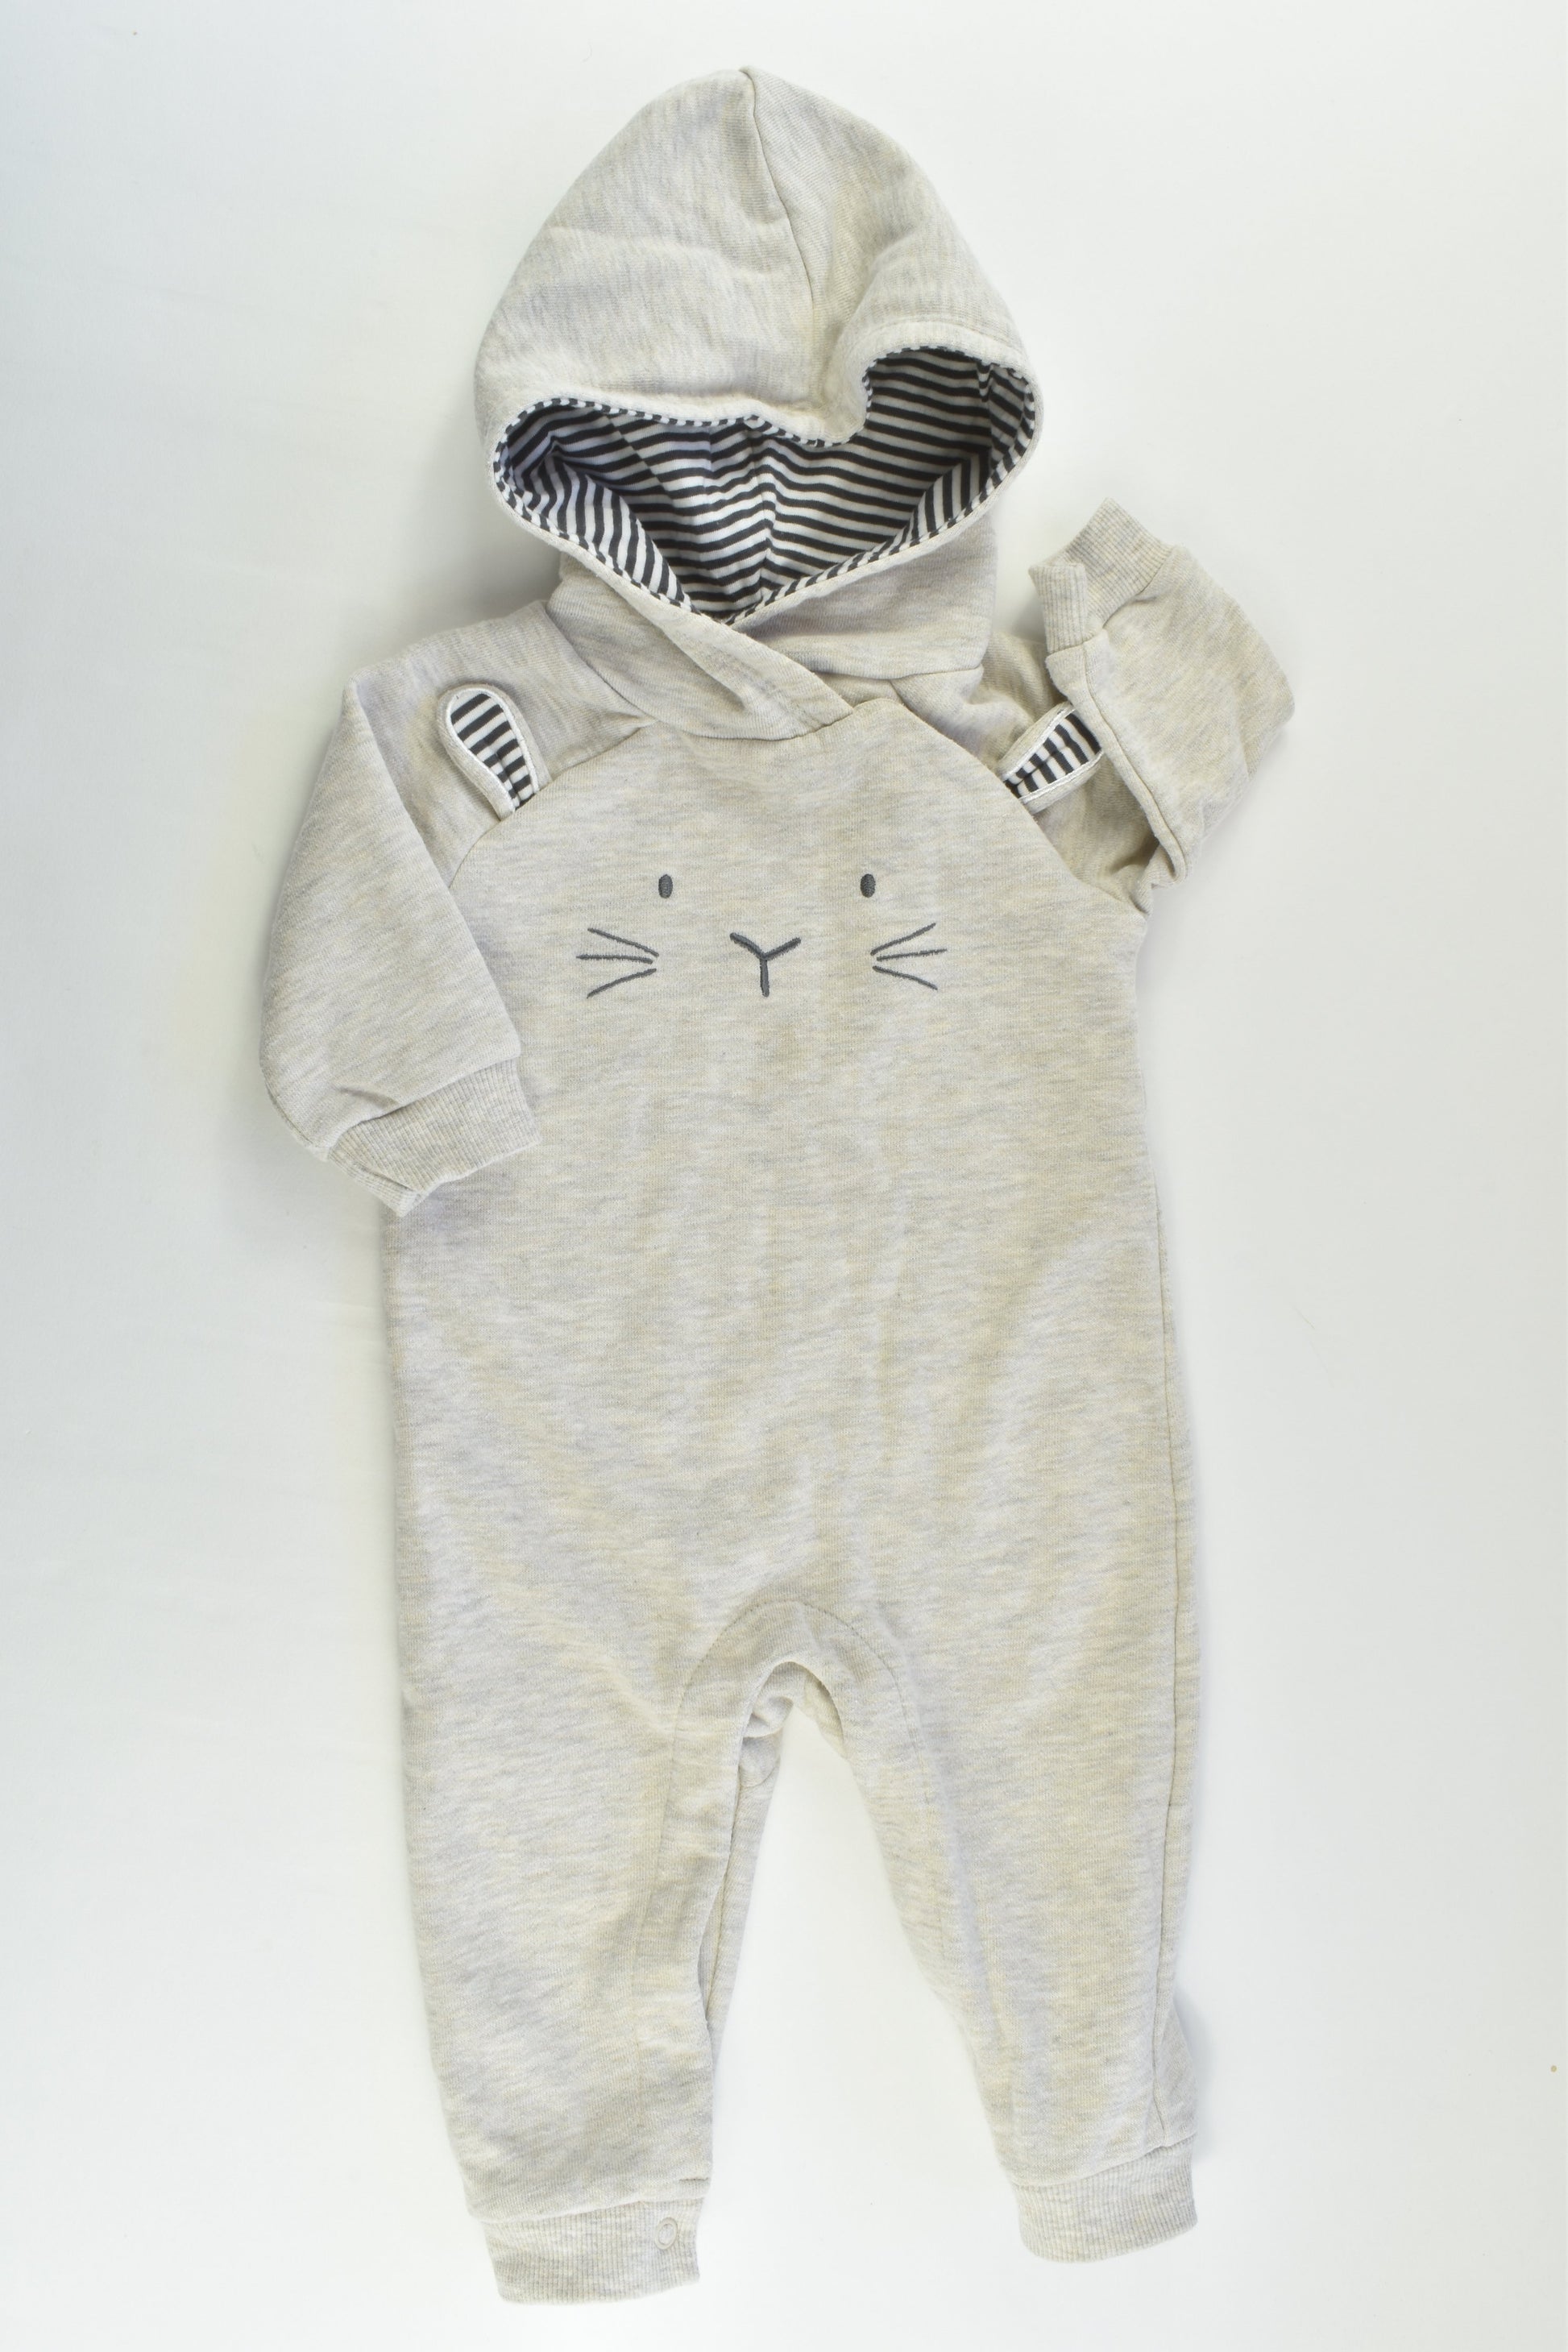 Anko Size 00 (3-6 months) Rabbit Sweater Playsuit